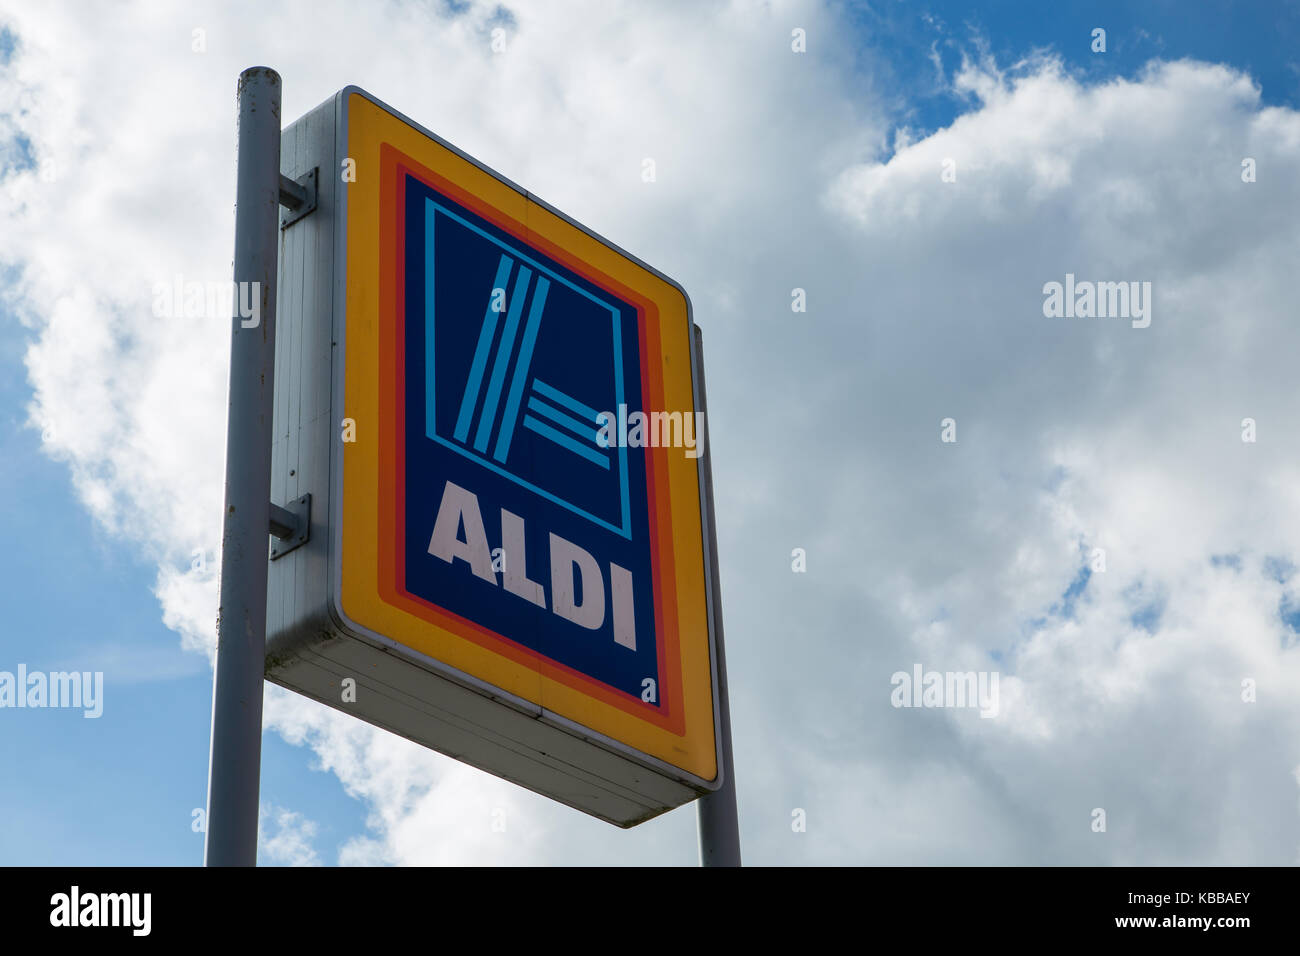 Aldi Supermarket In Leigh, England, UK Stock Photo